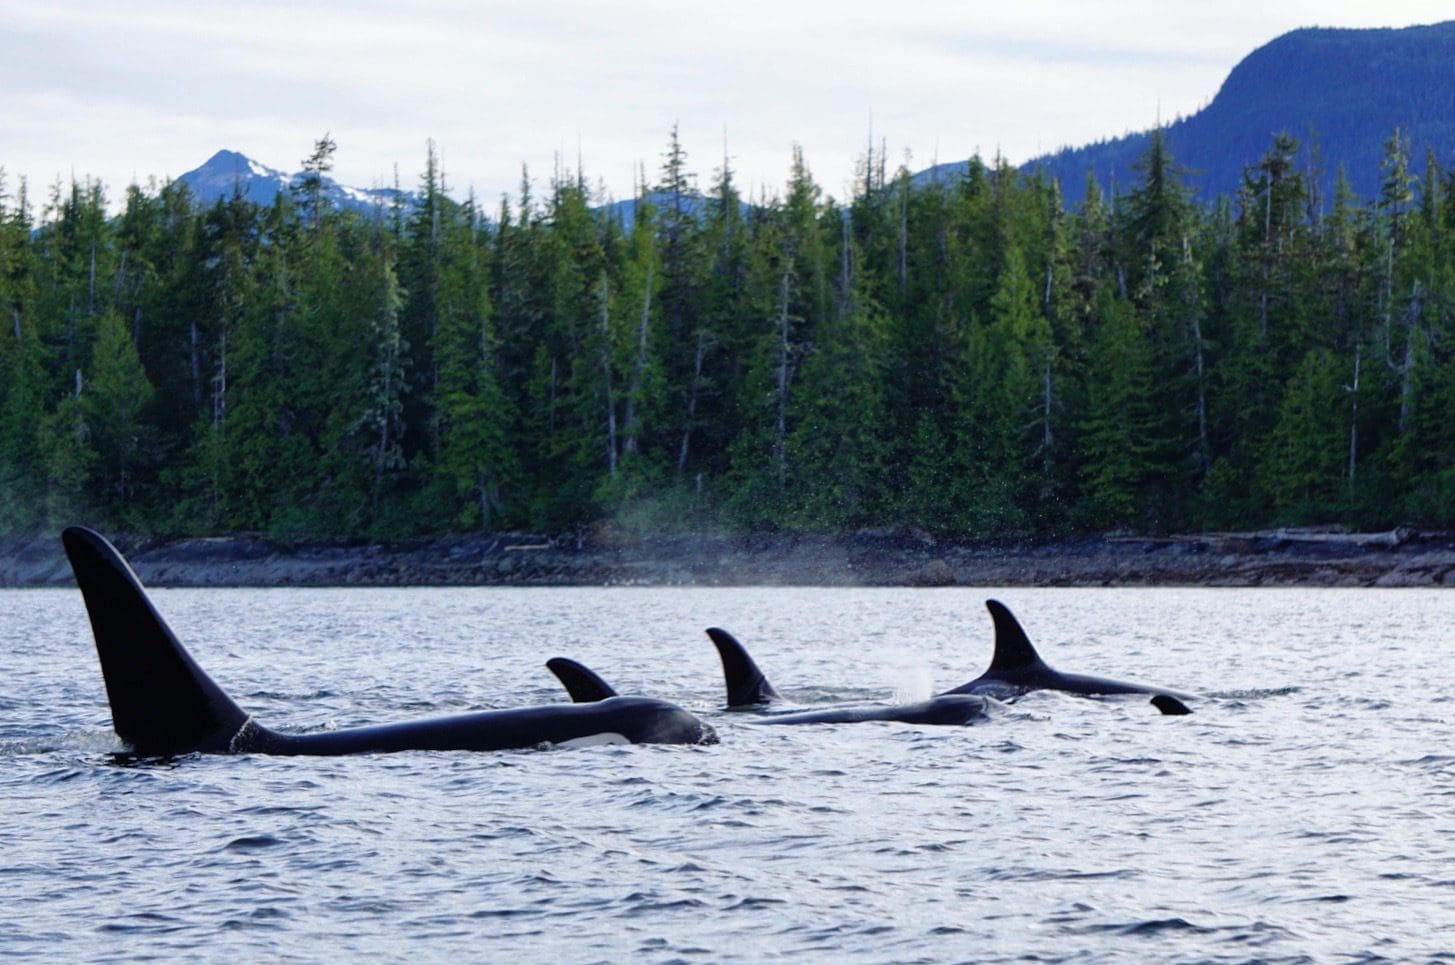 A pod of Orcas also called Killer Whales